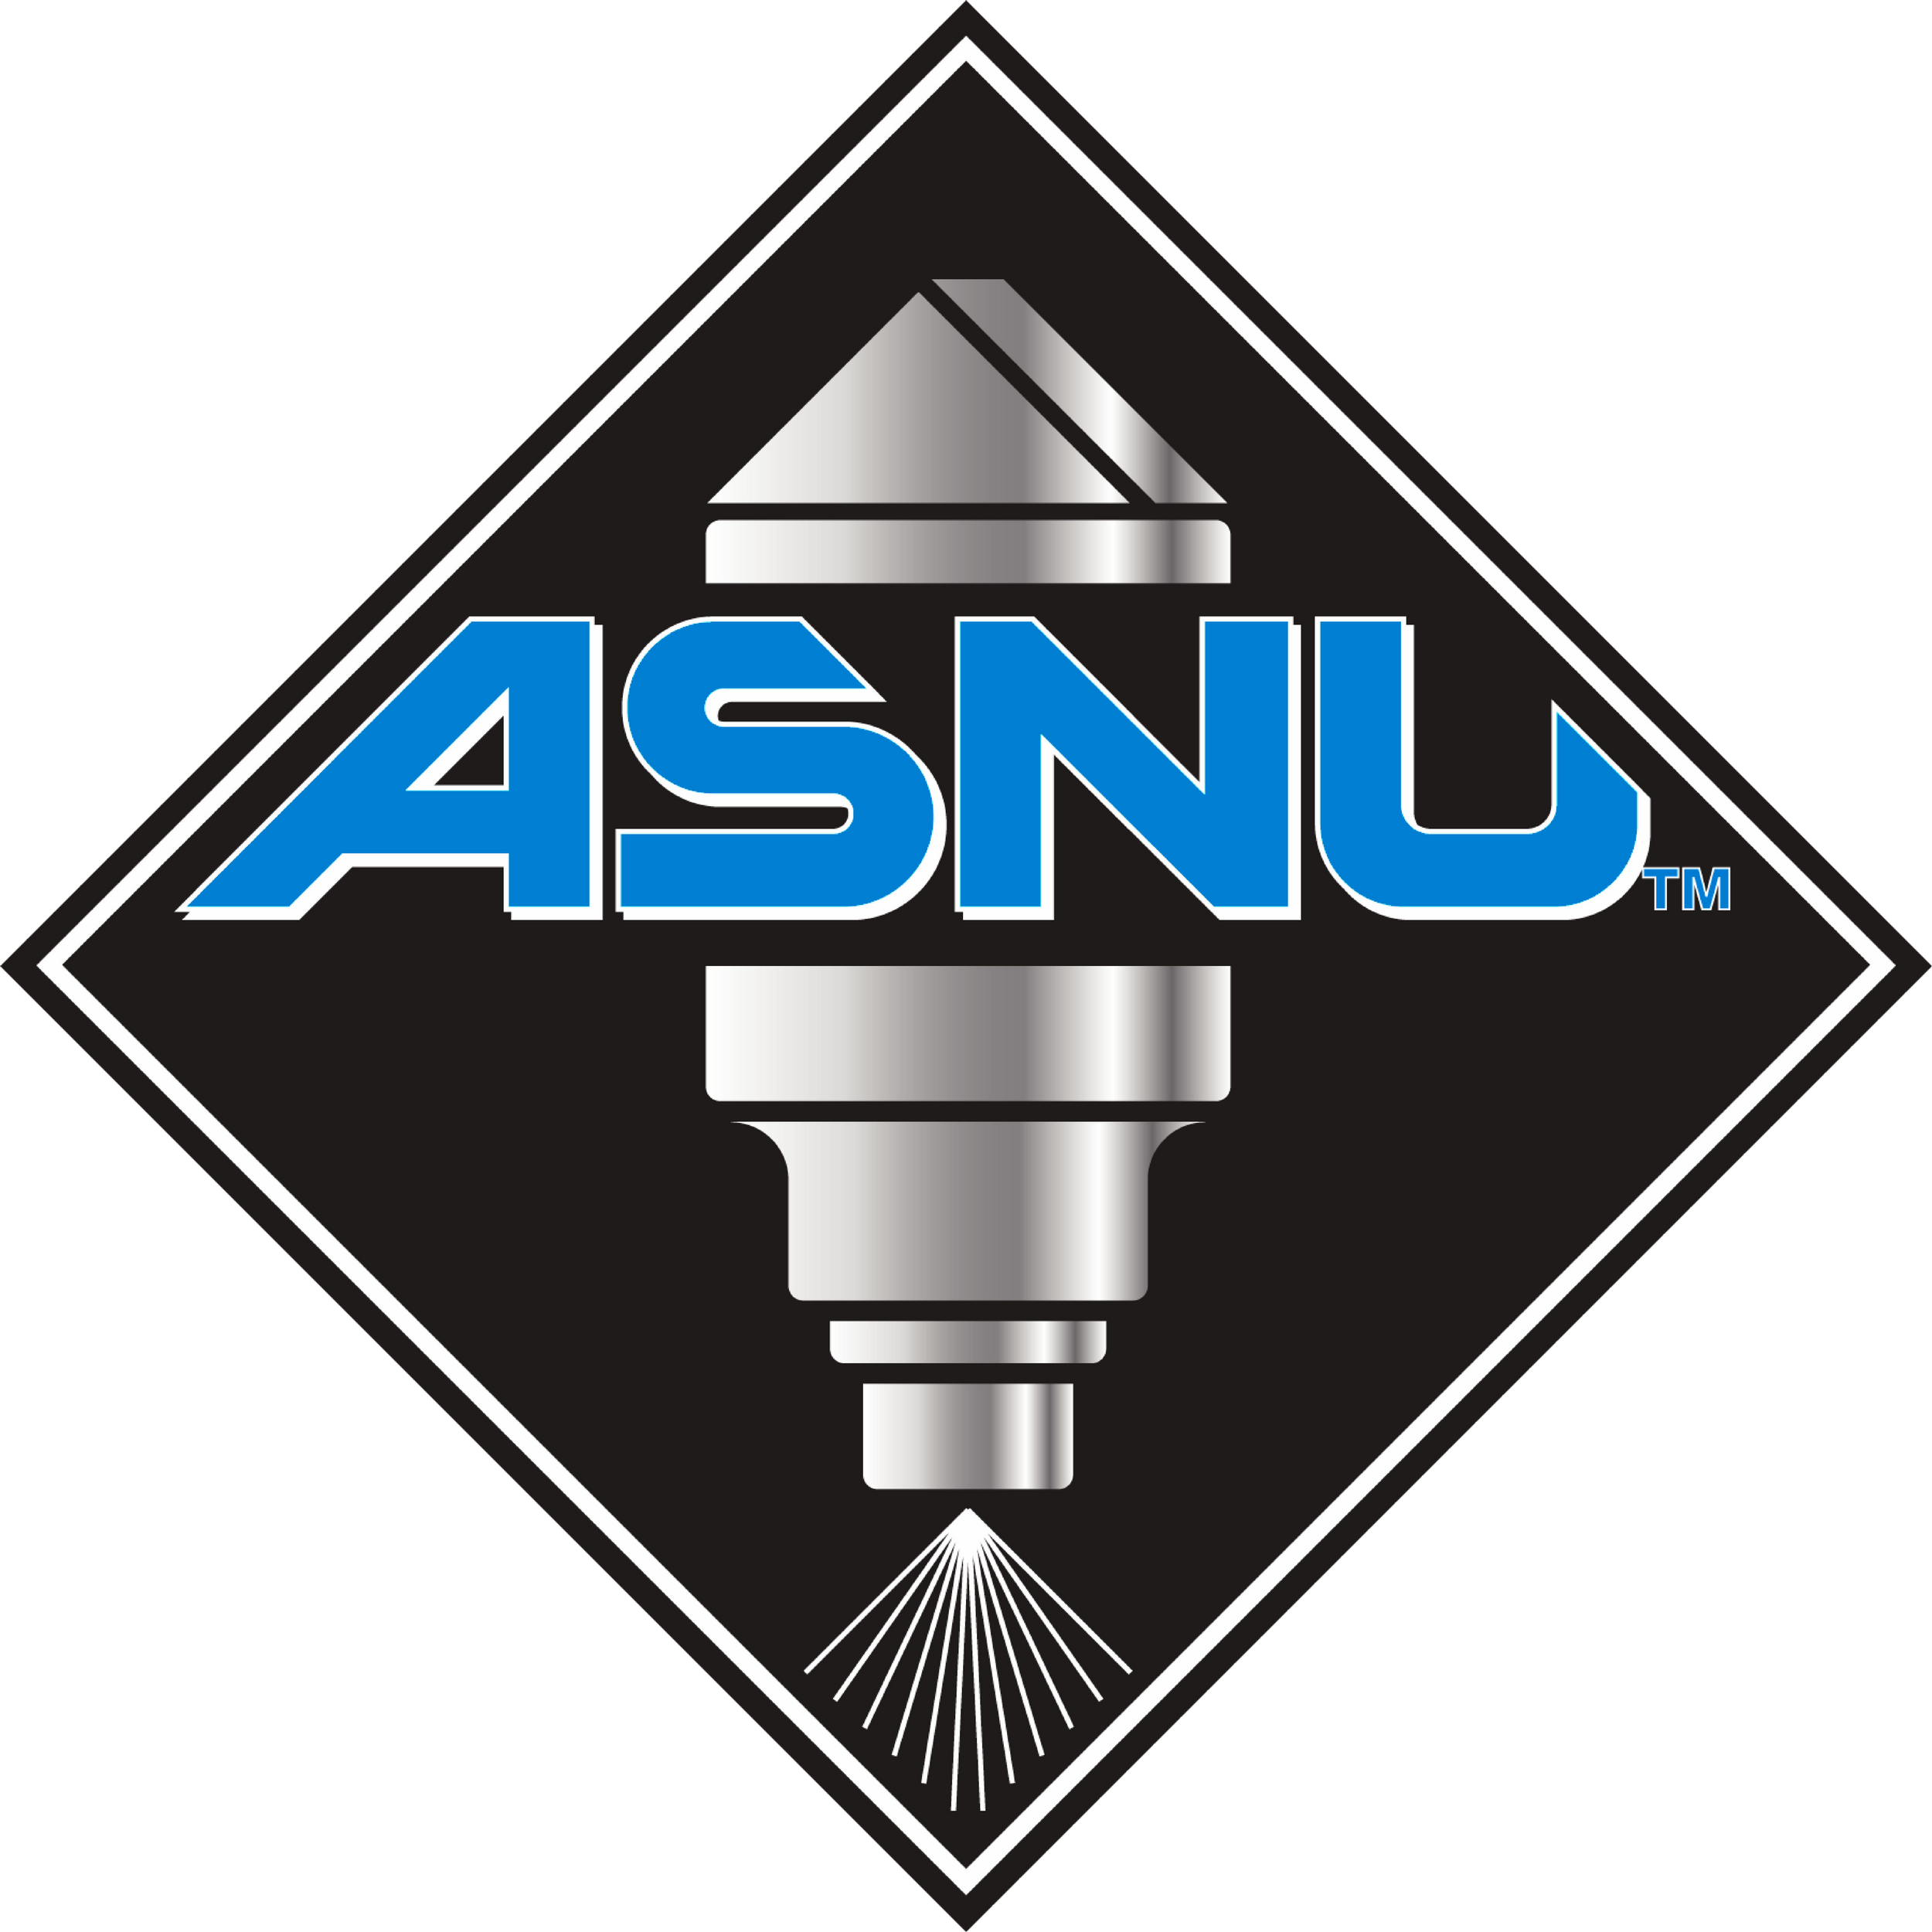 www.asnu.com